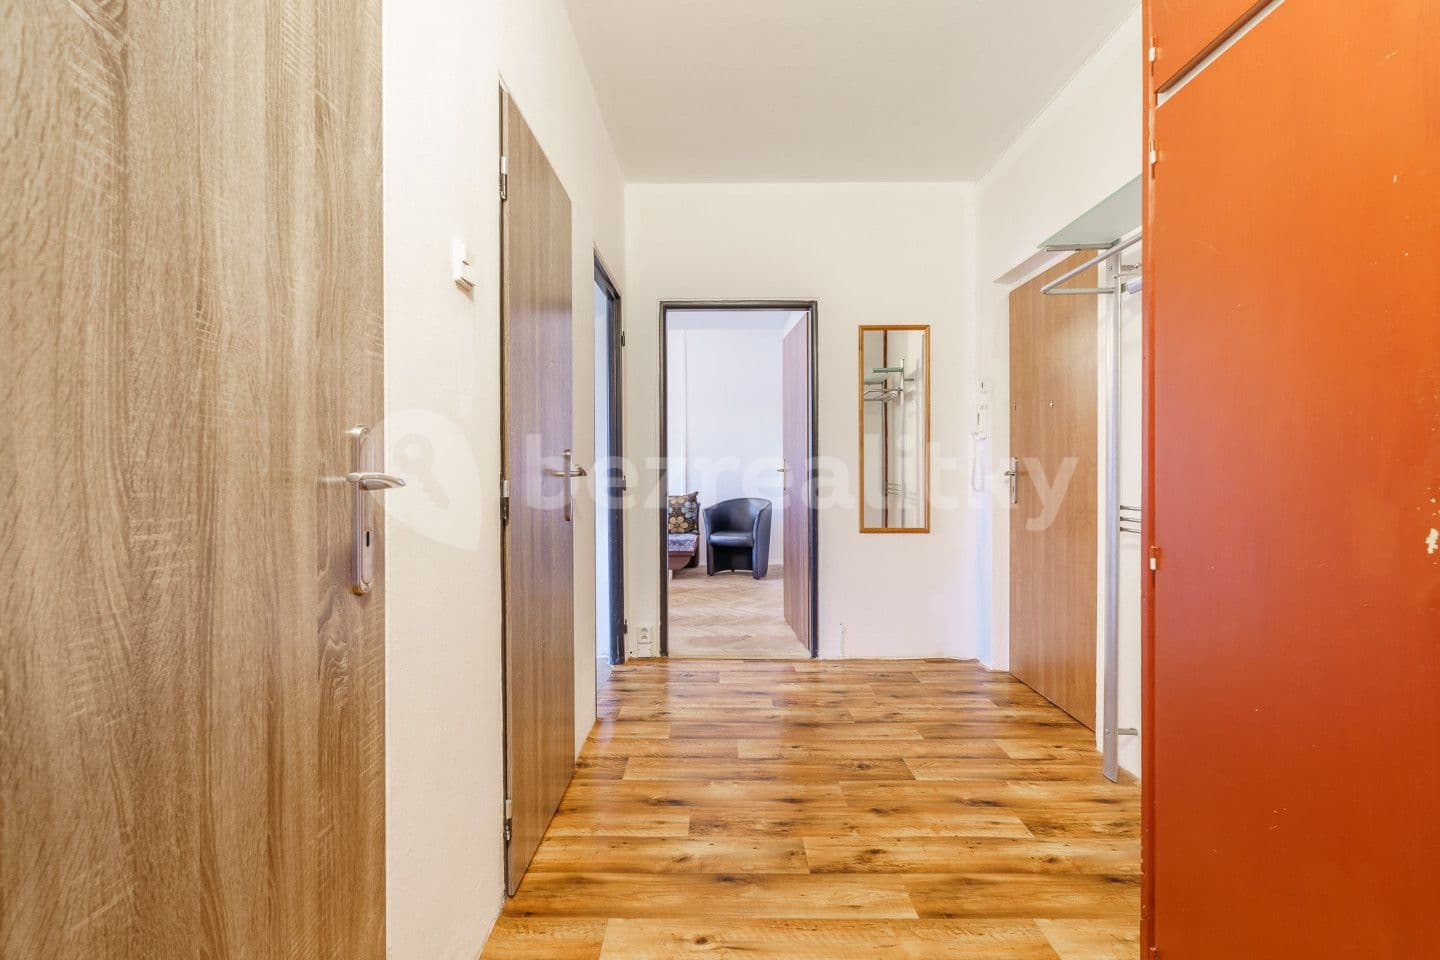 2 bedroom flat for sale, 53 m², Okružní, Nejdek, Karlovarský Region